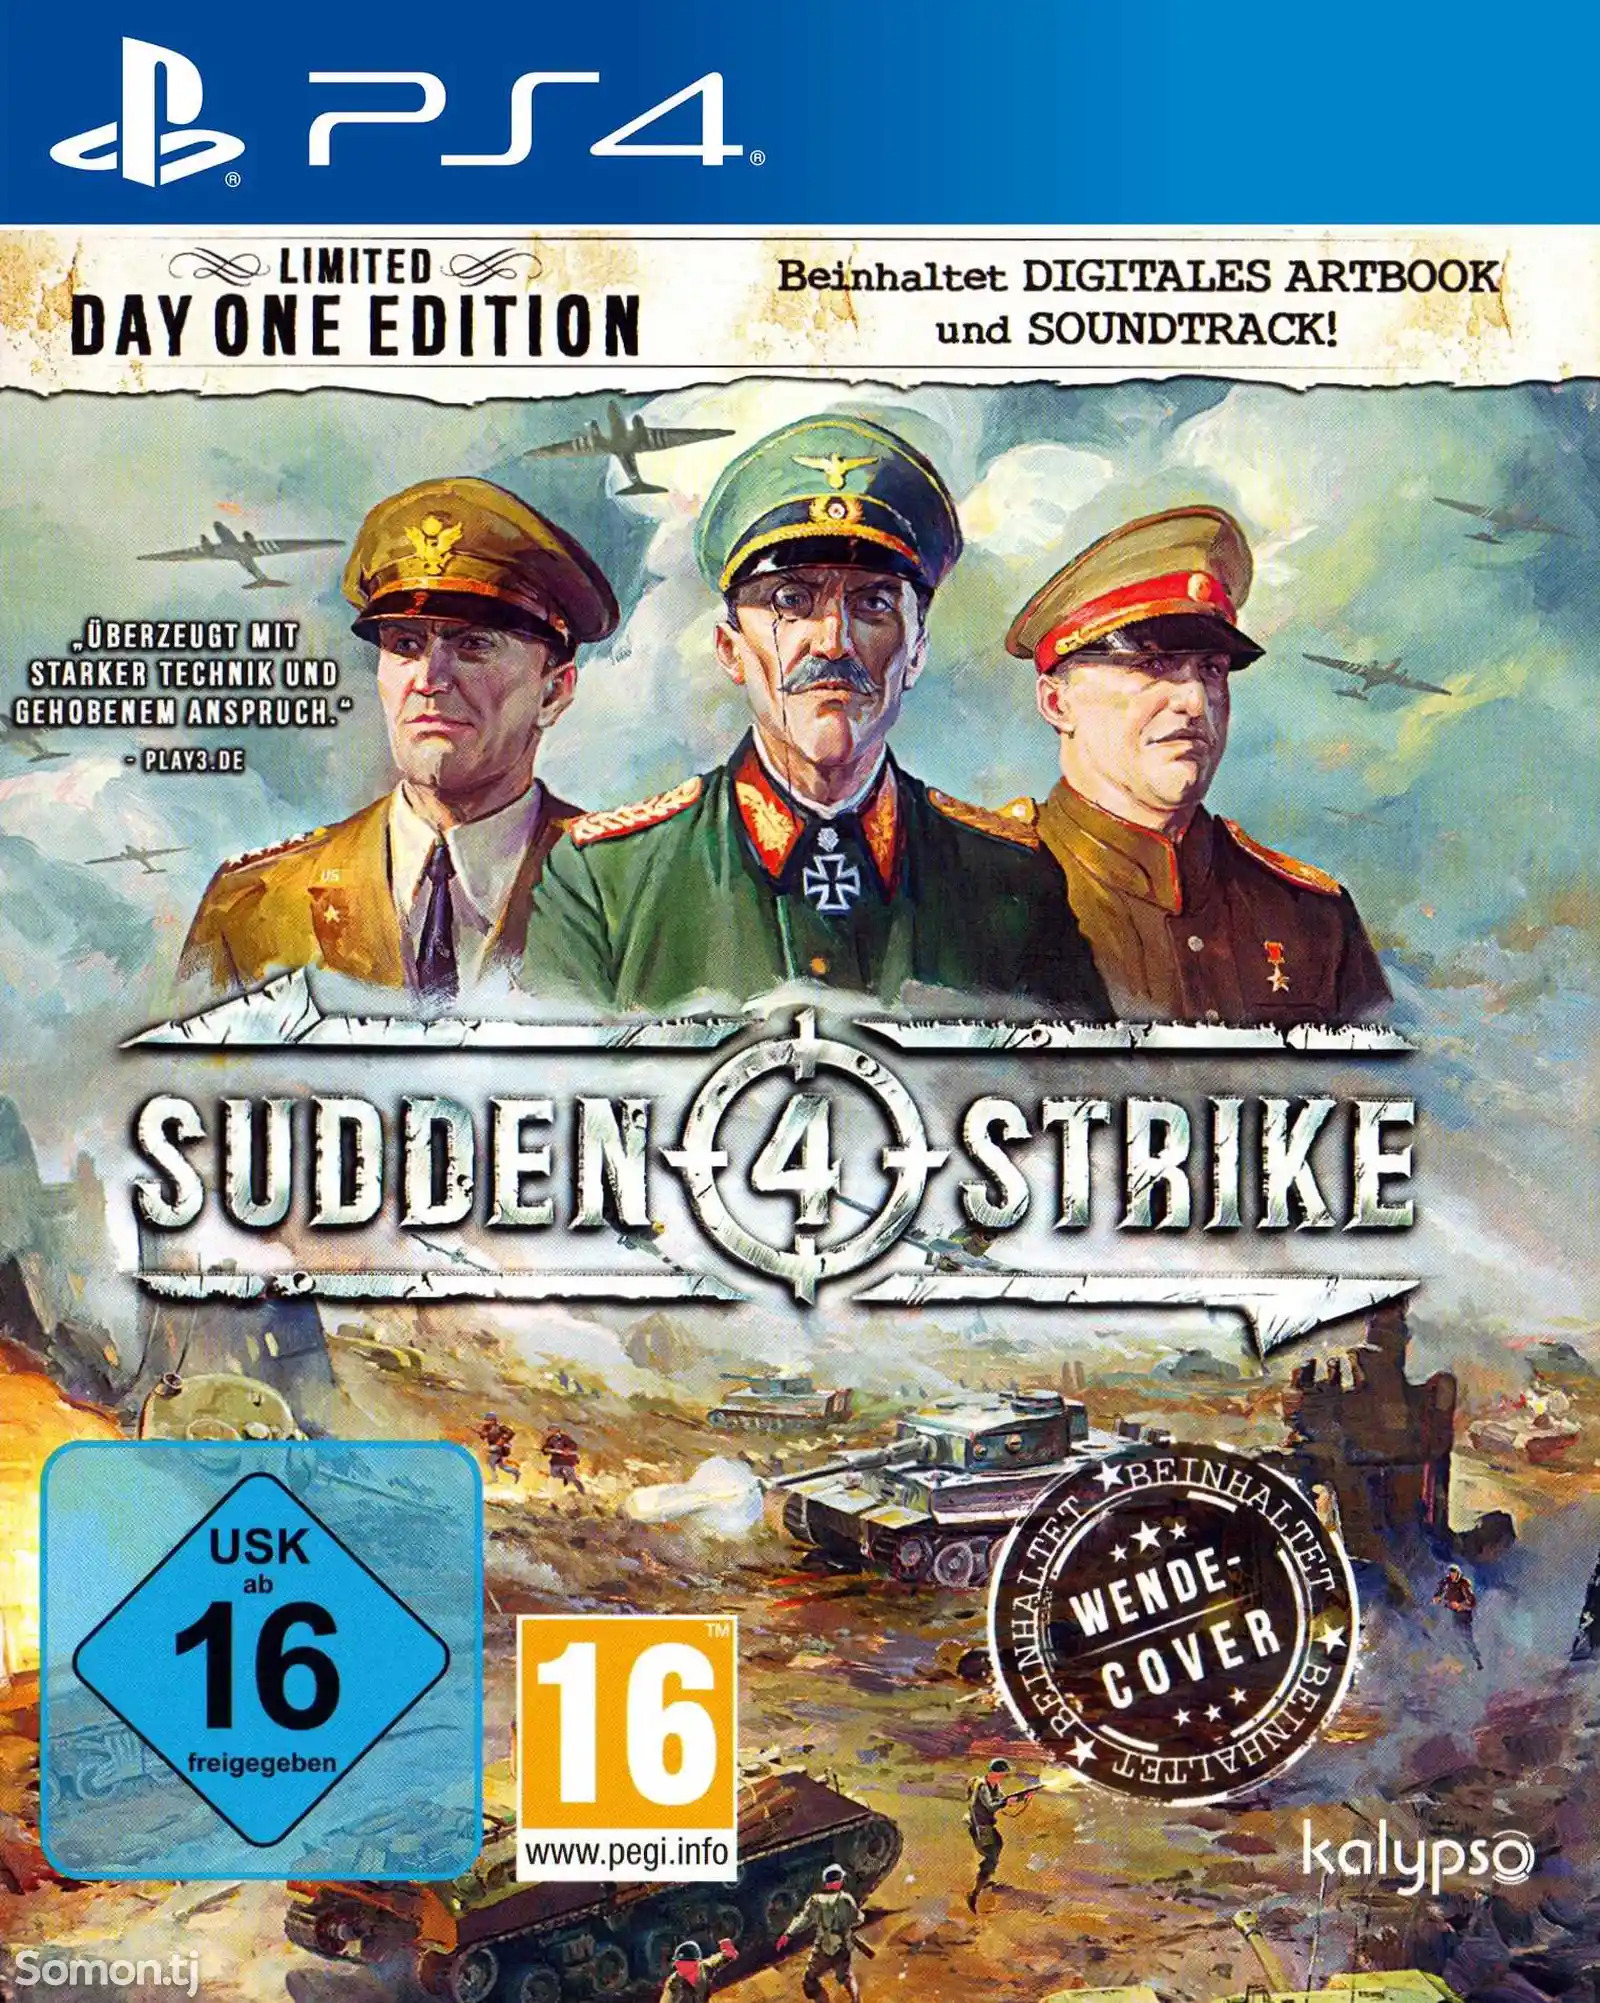 Игра Sudden strike 4 для PS-4 / 5.05 / 6.72 / 7.02 / 7.55 / 9.00 /-1